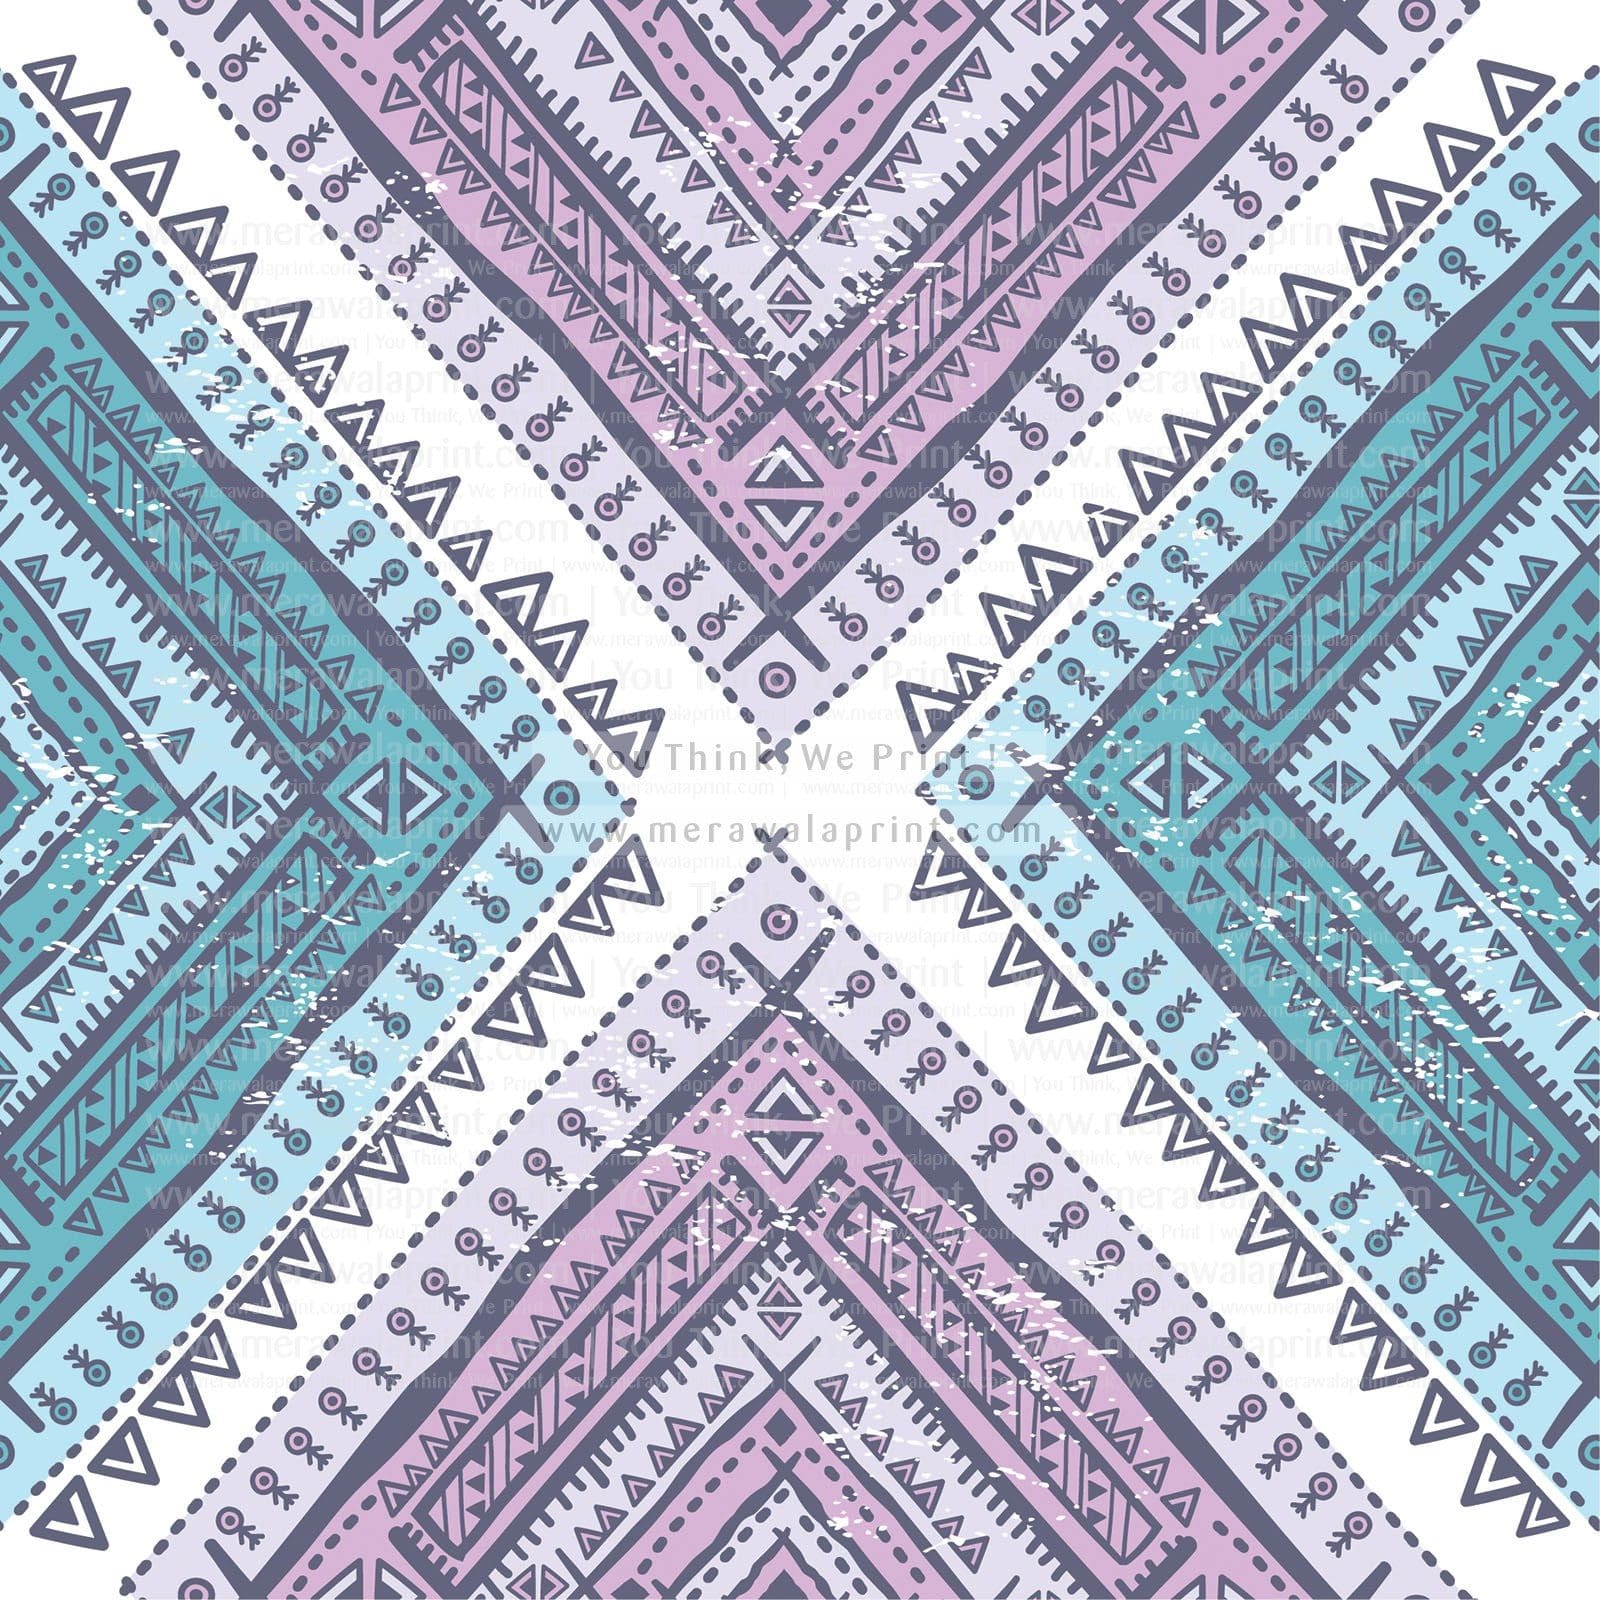 Tribal ethnic geometric – Merawalaprint - Geometric Wallpaper